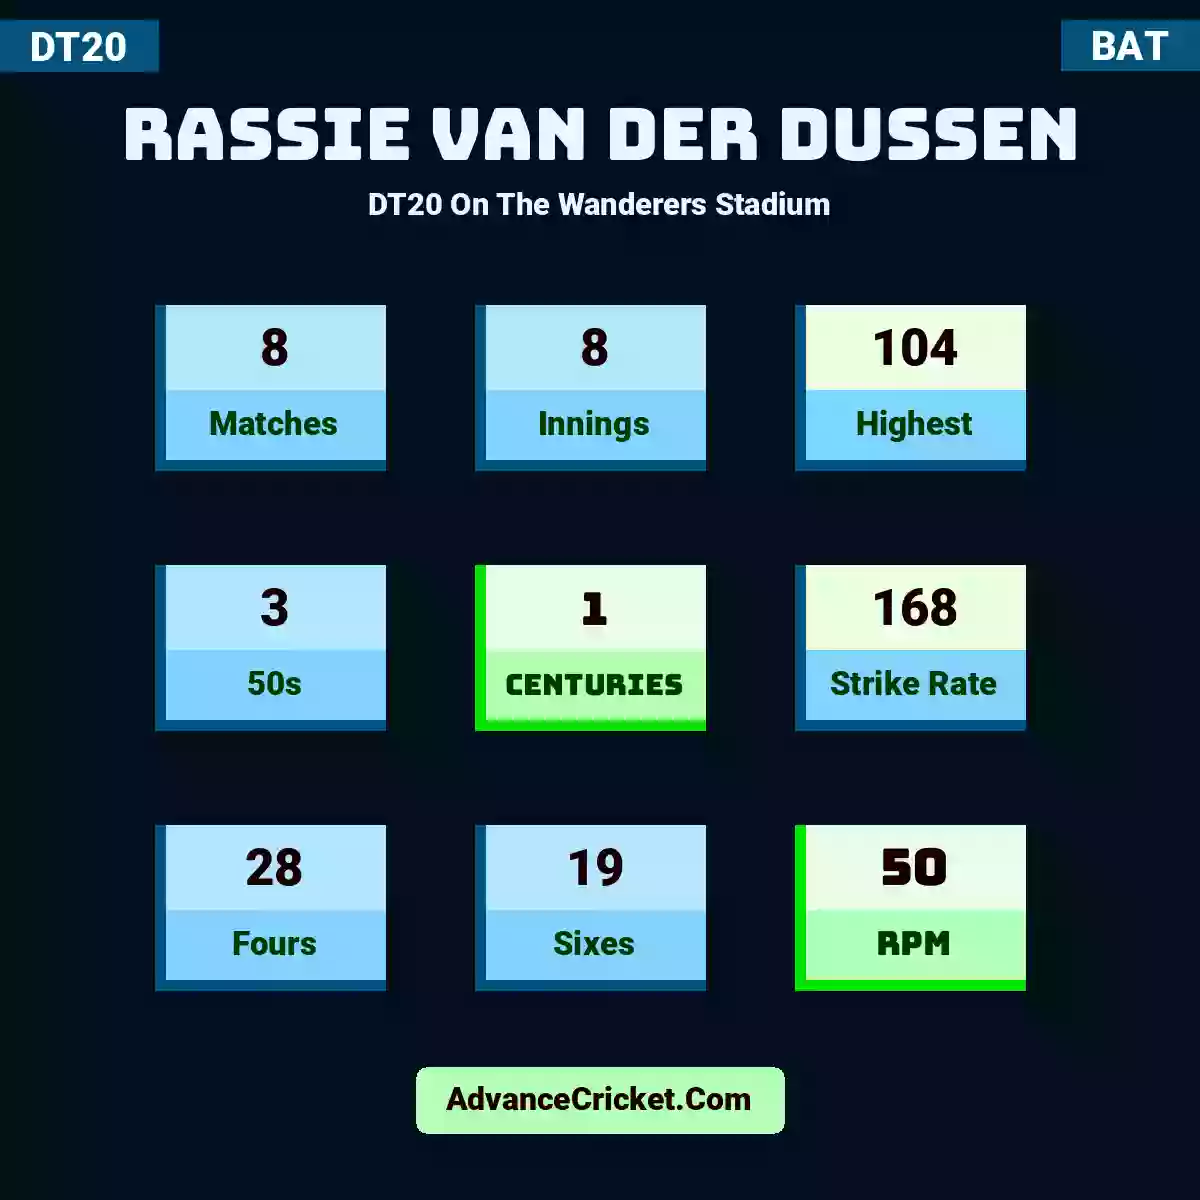 Rassie van der Dussen DT20  On The Wanderers Stadium, Rassie van der Dussen played 8 matches, scored 104 runs as highest, 3 half-centuries, and 1 centuries, with a strike rate of 168. R.Dussen hit 28 fours and 19 sixes, with an RPM of 50.